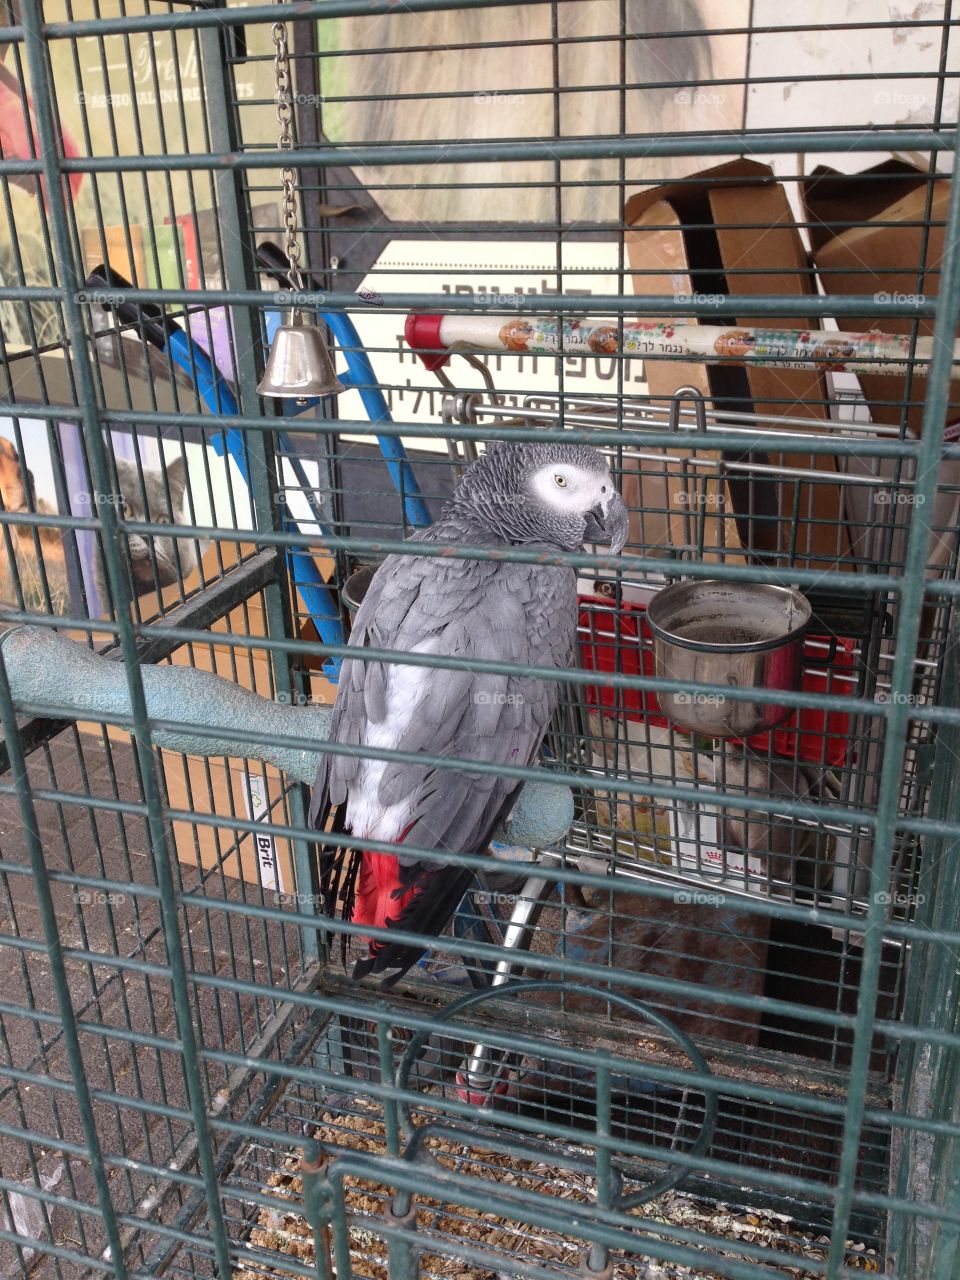 Grey parrot 